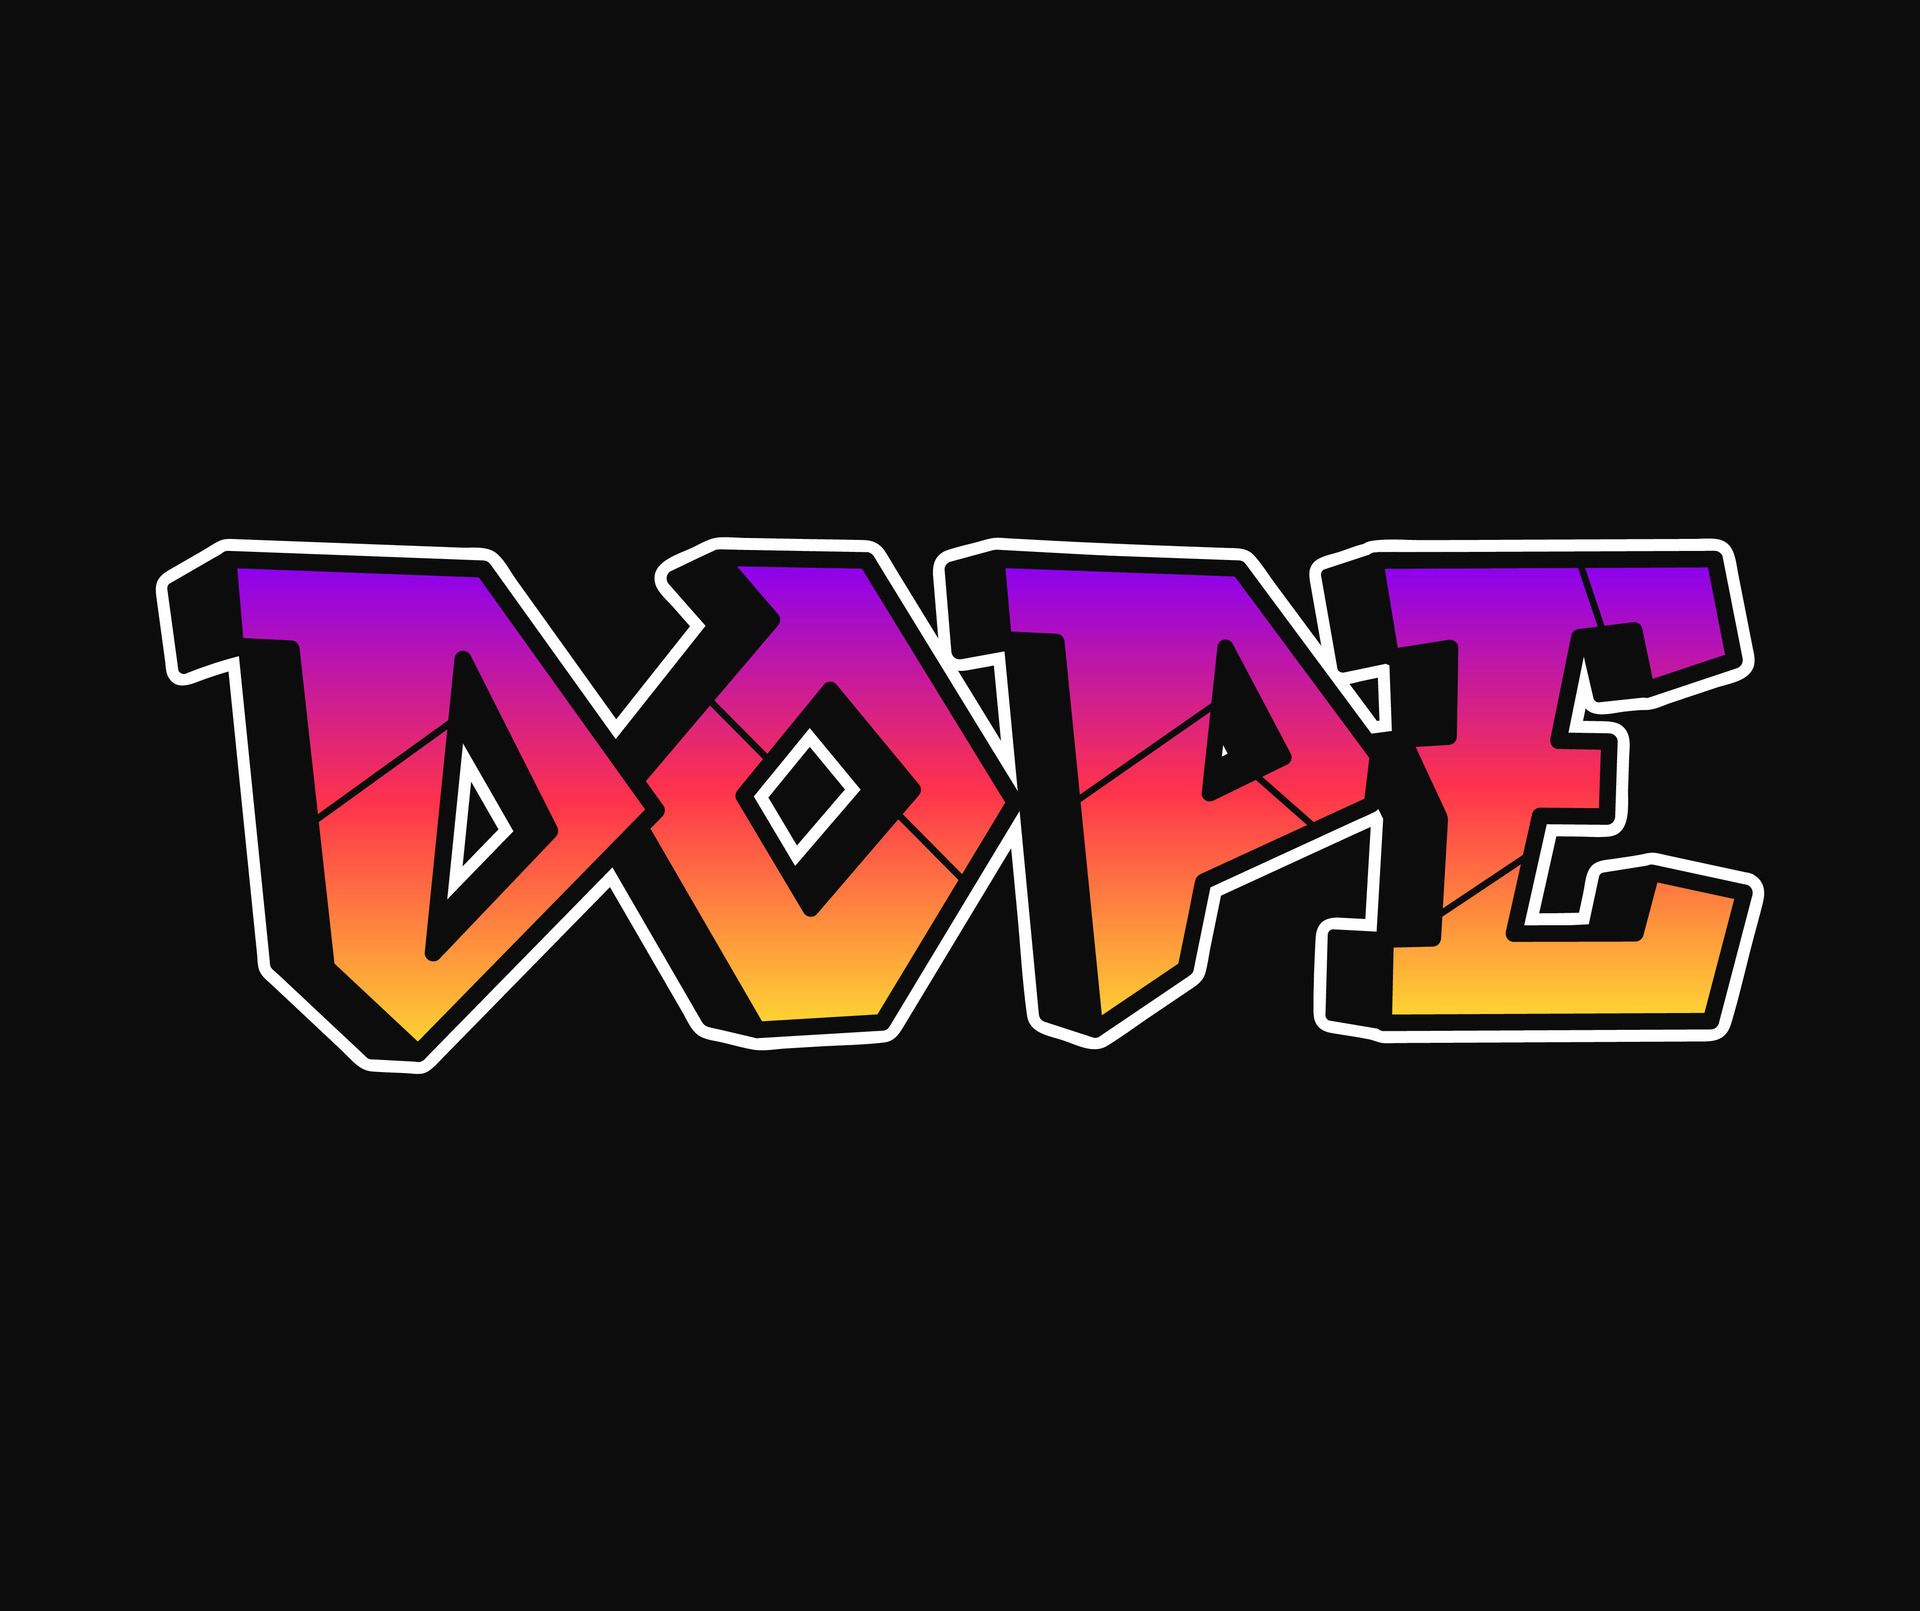 dope logo wallpaper